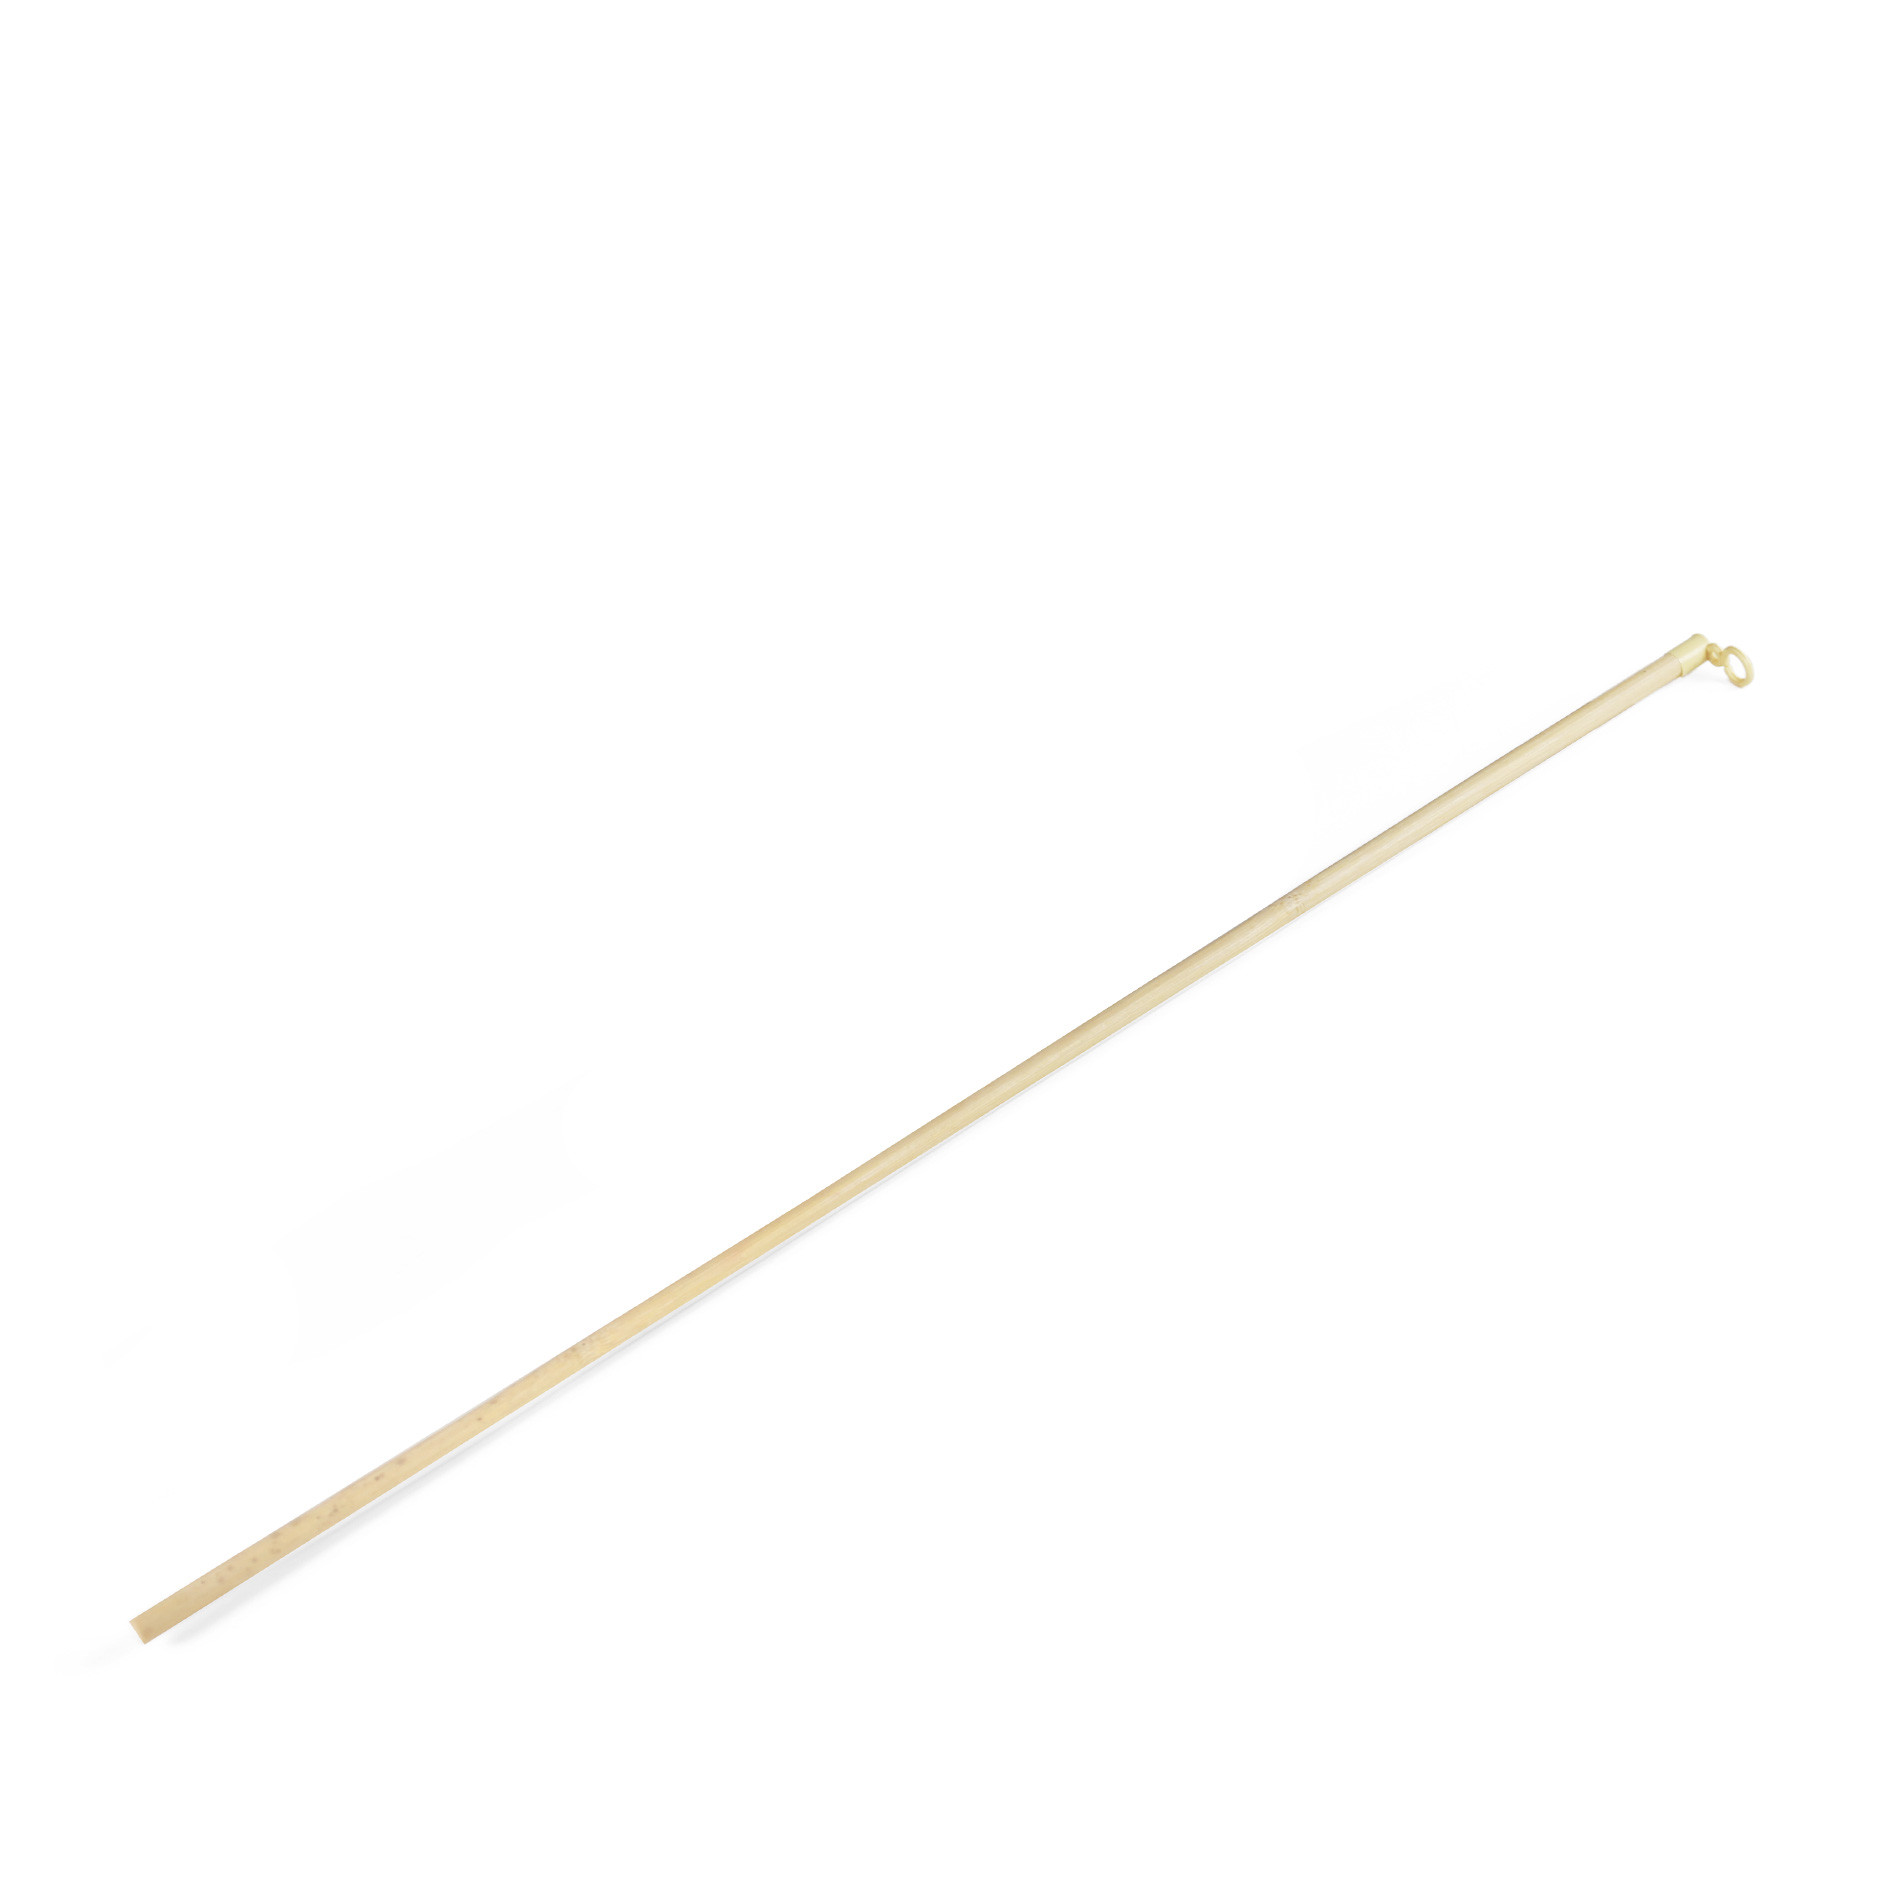 the bamboo stick 55 cm